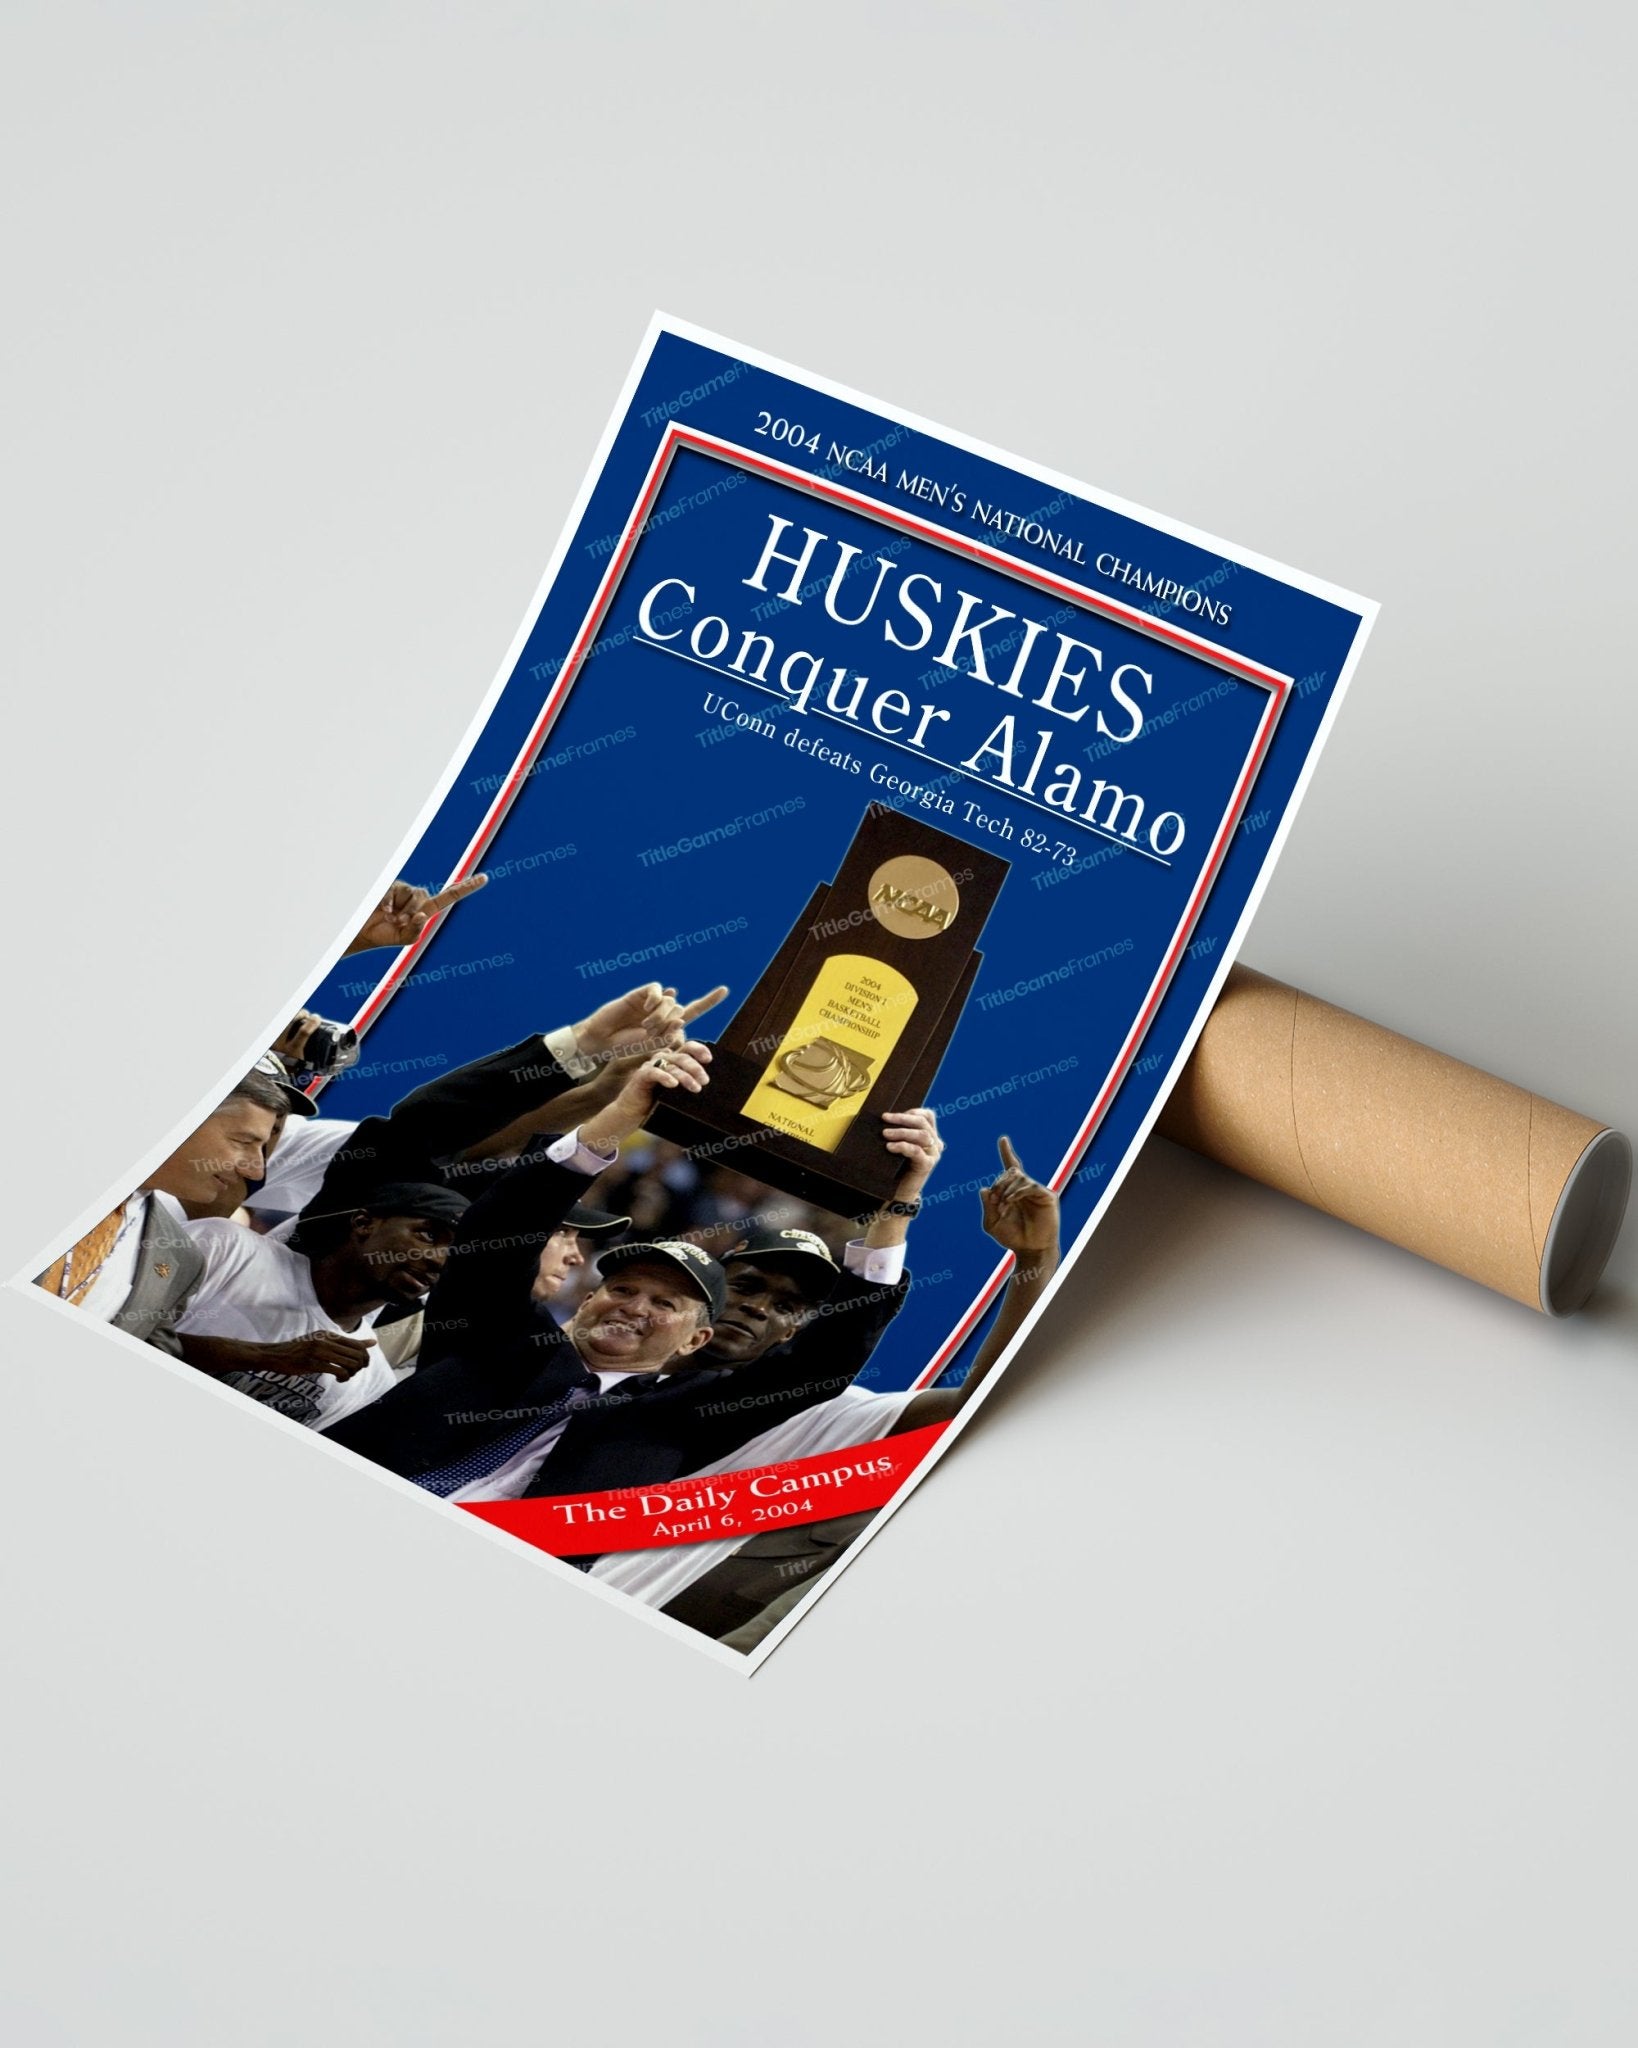 2004 UConn 'HUSKIES Conquer Alamo' NCAA Championship Framed Newspaper - Title Game Frames